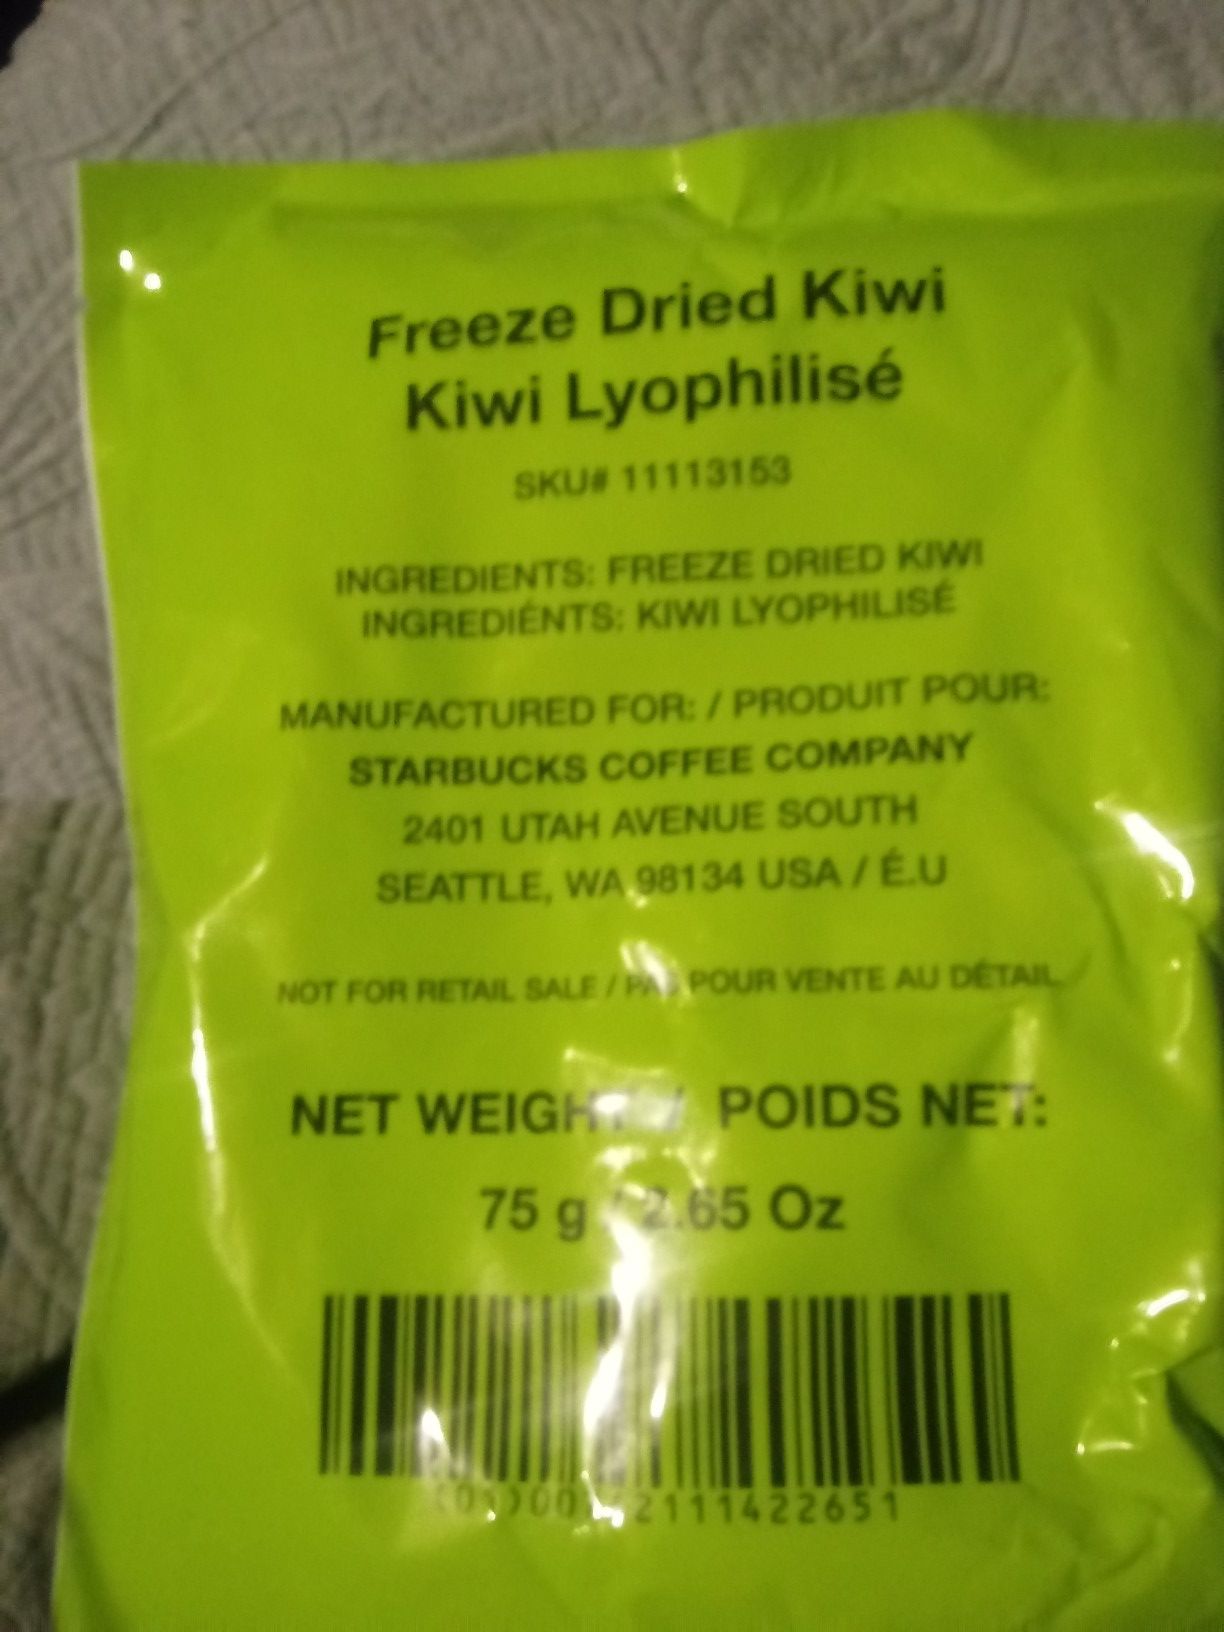 Freexe dried kiwi